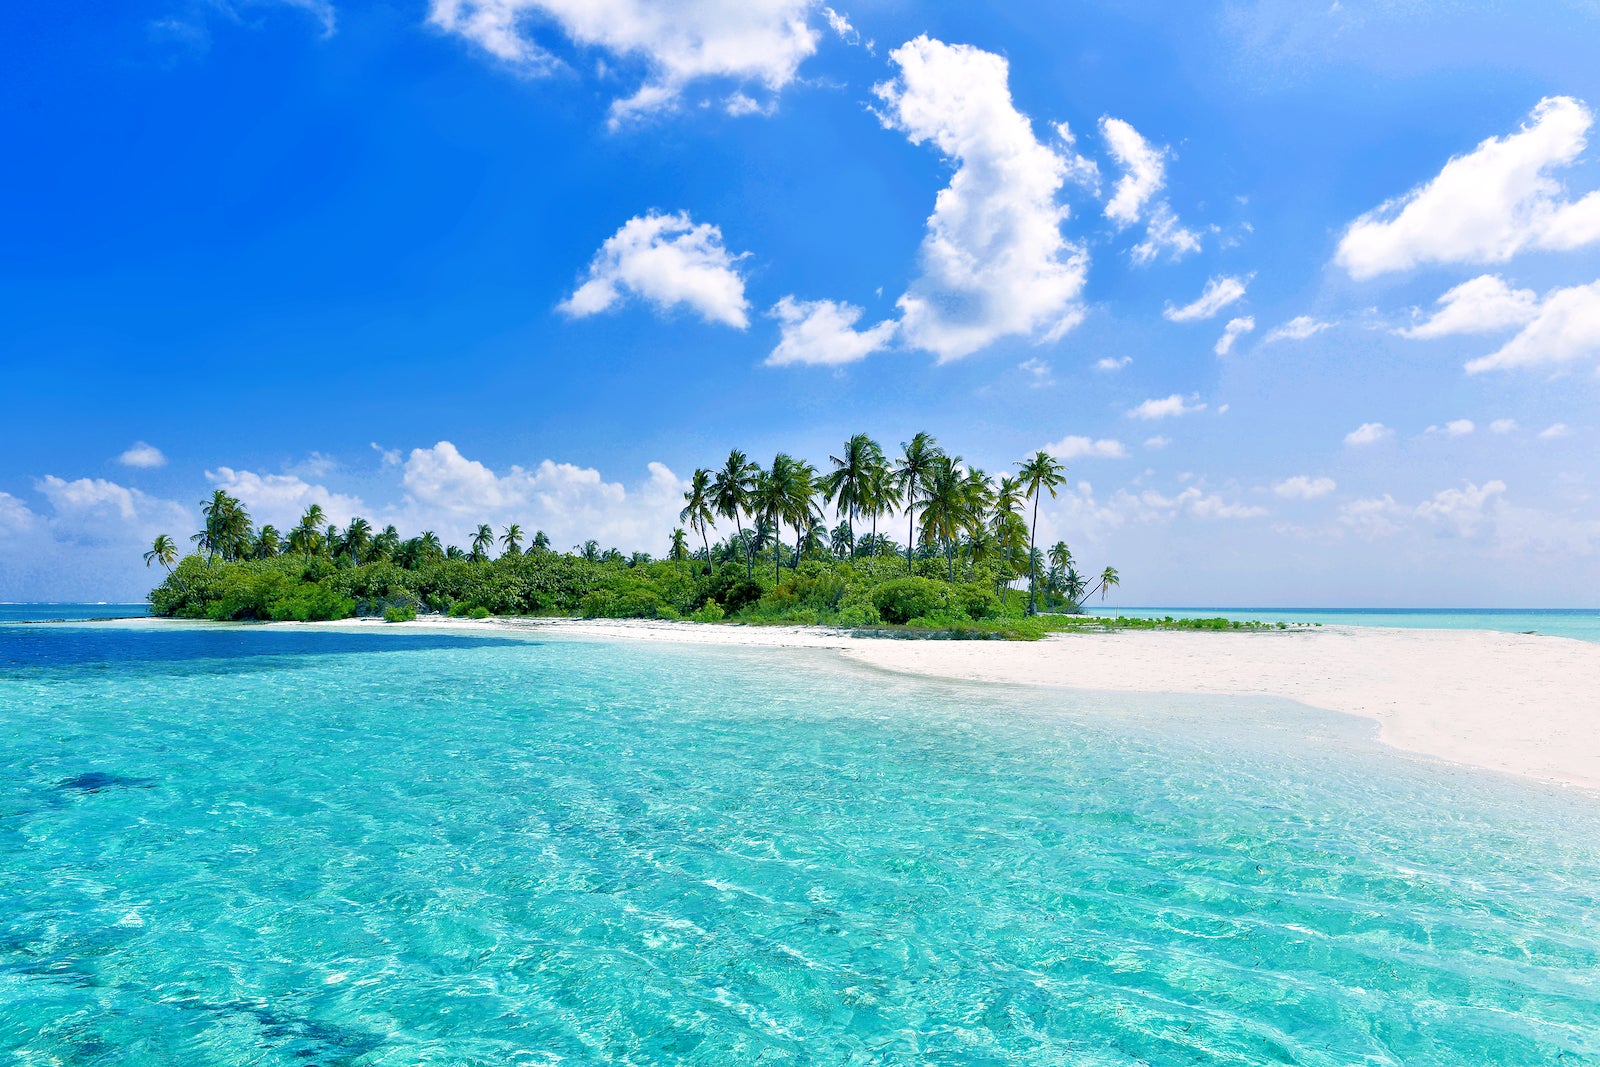 Virgin Island in Maldives